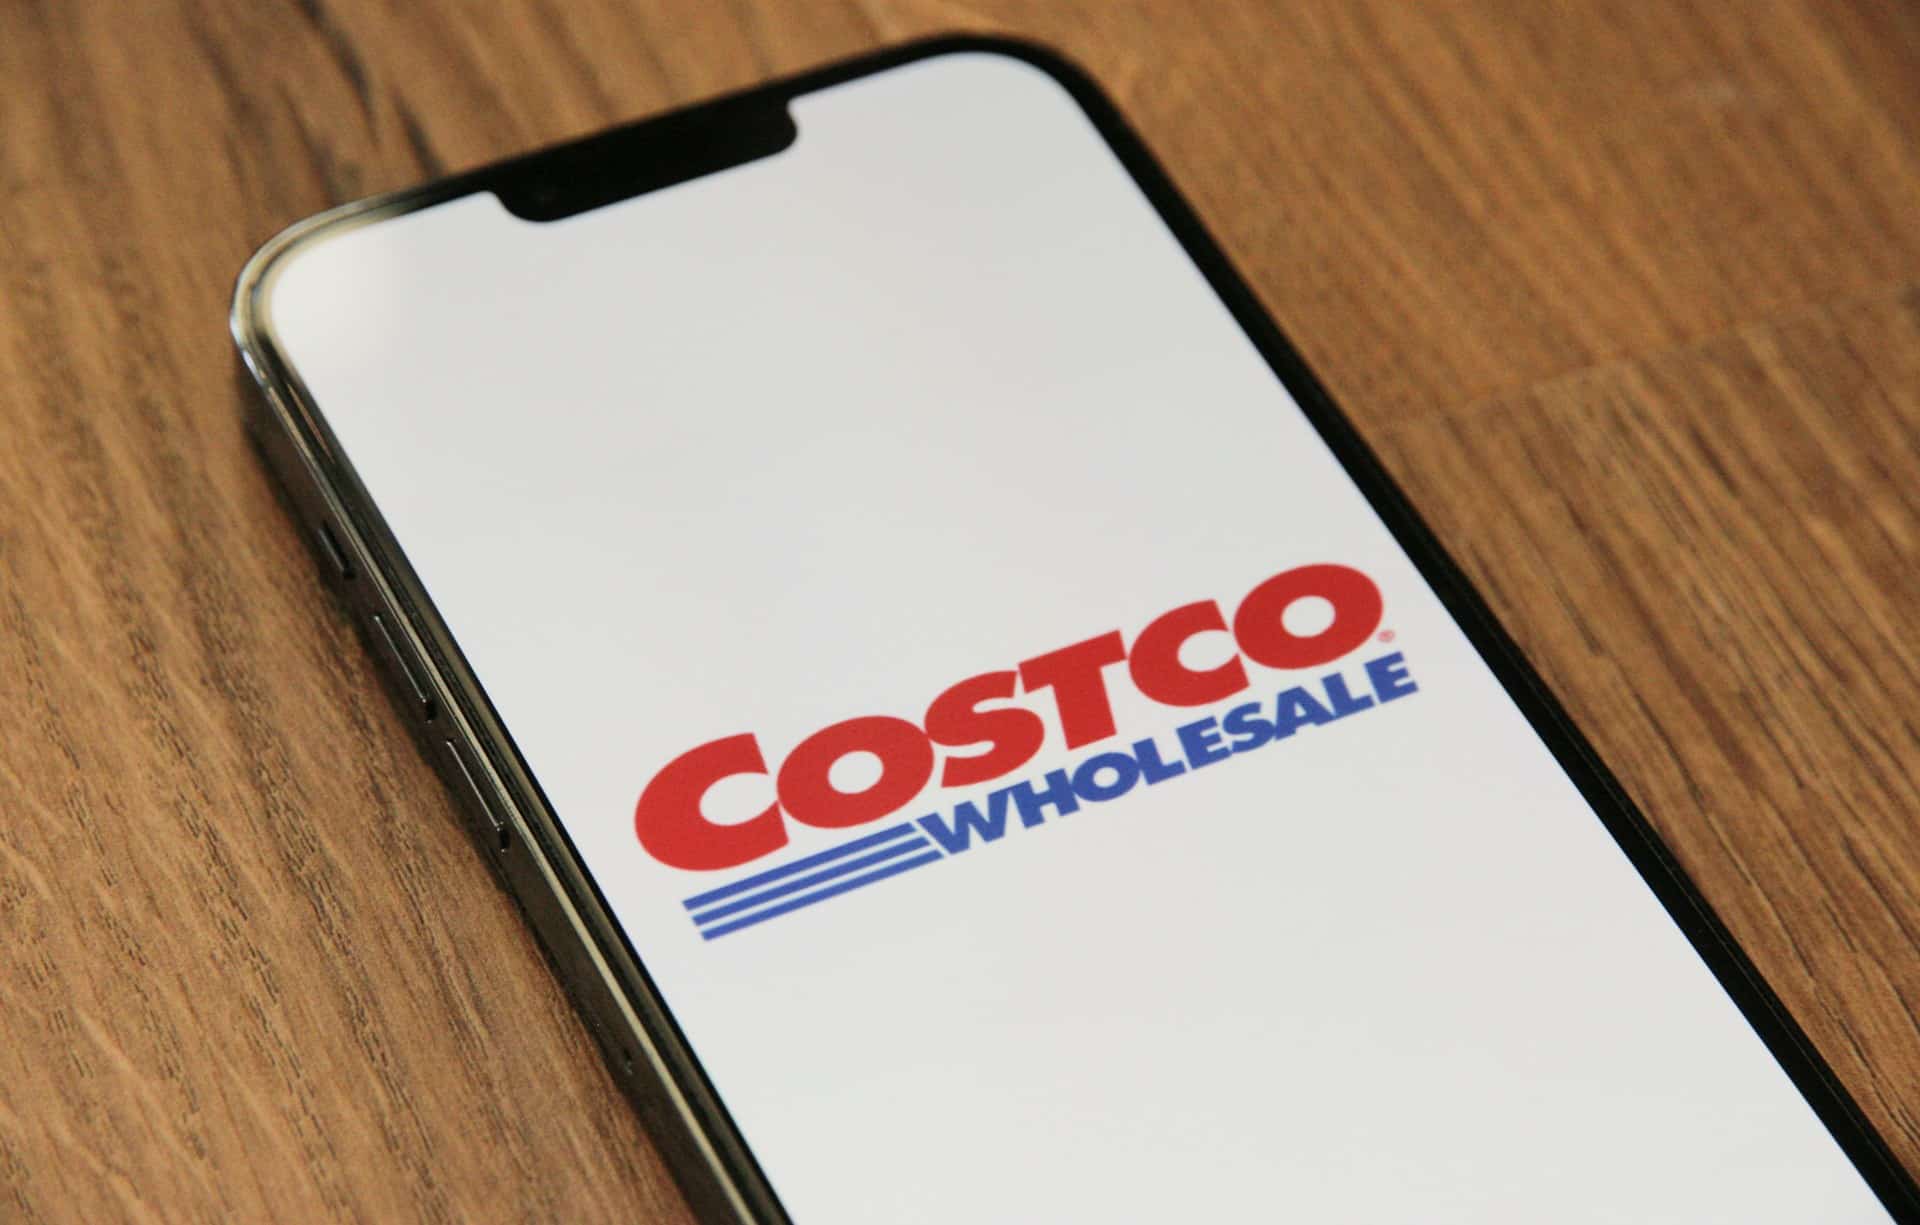 costco website on mobile phone